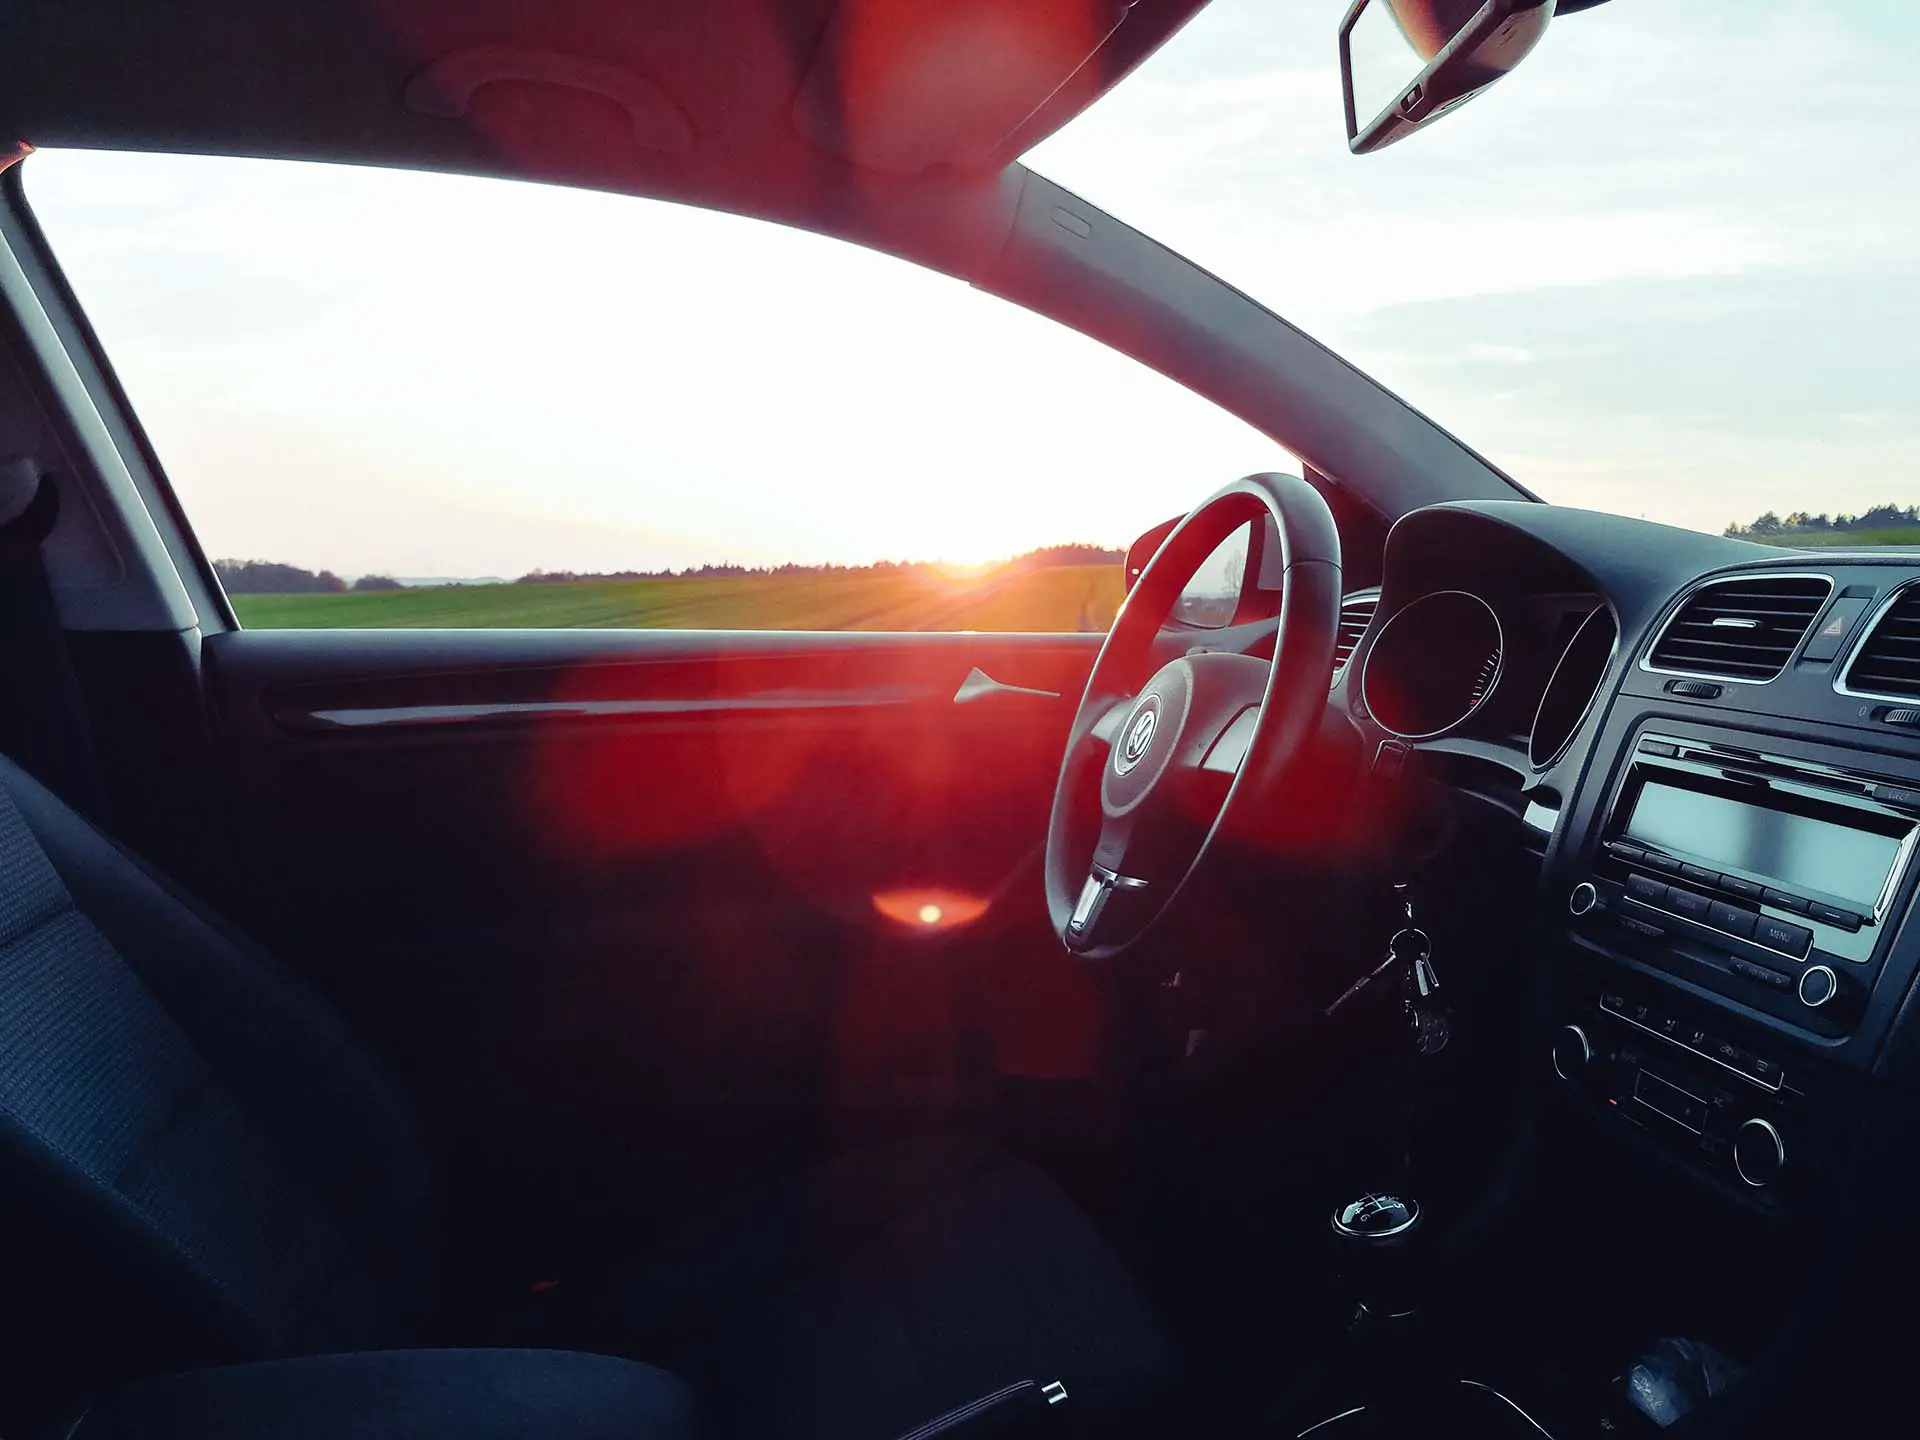 Black car interior during sunset